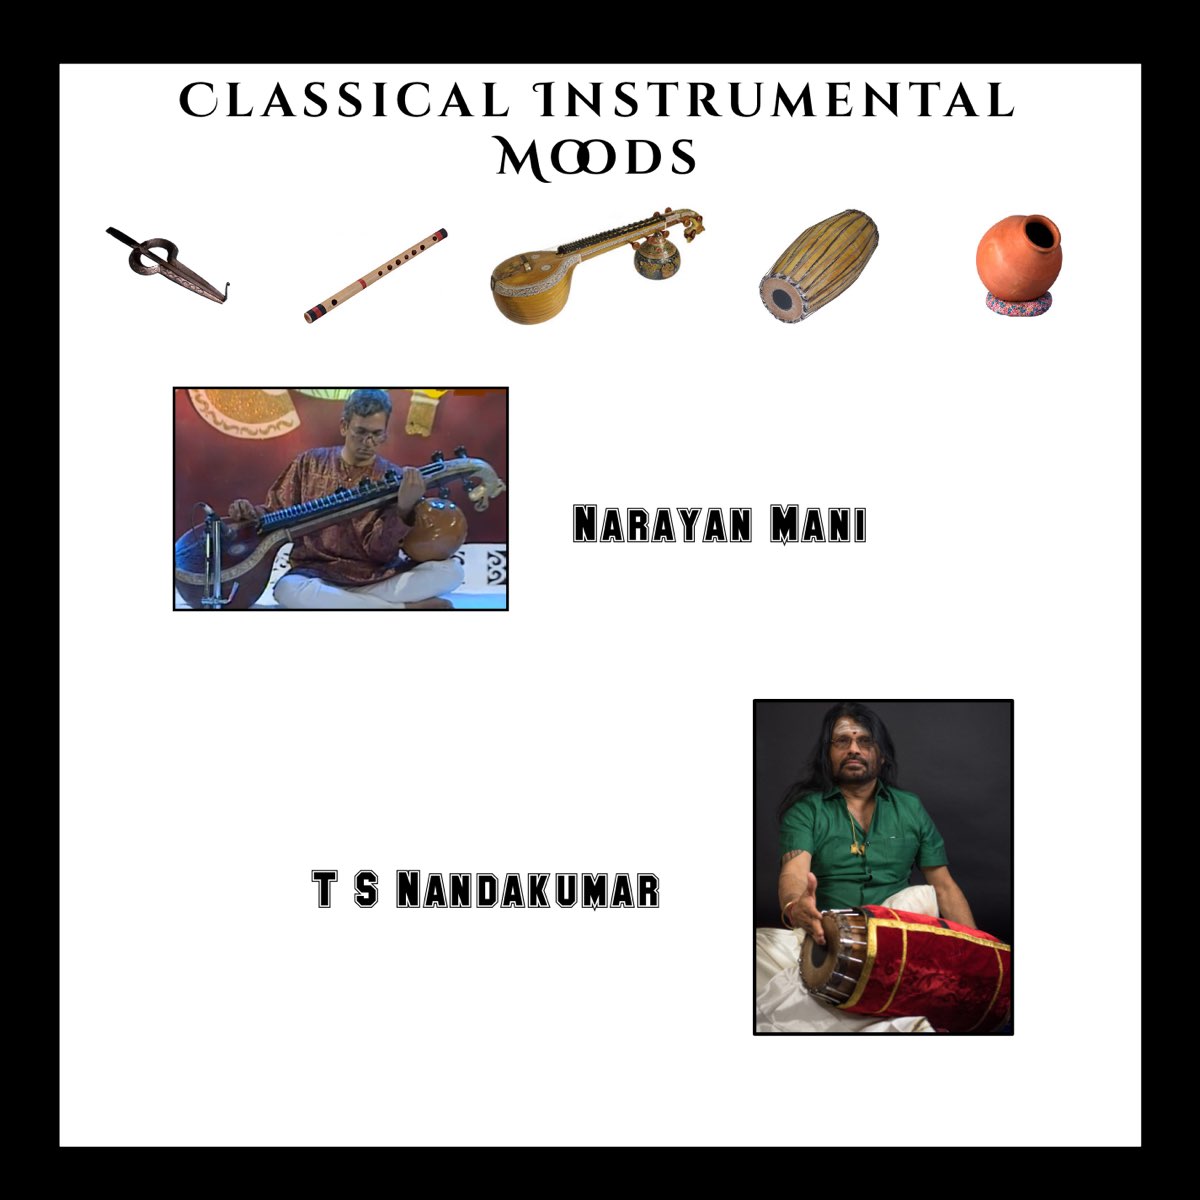 Classical Instrumental Moods by T S Nandakumar & Narayan Mani on Apple Music